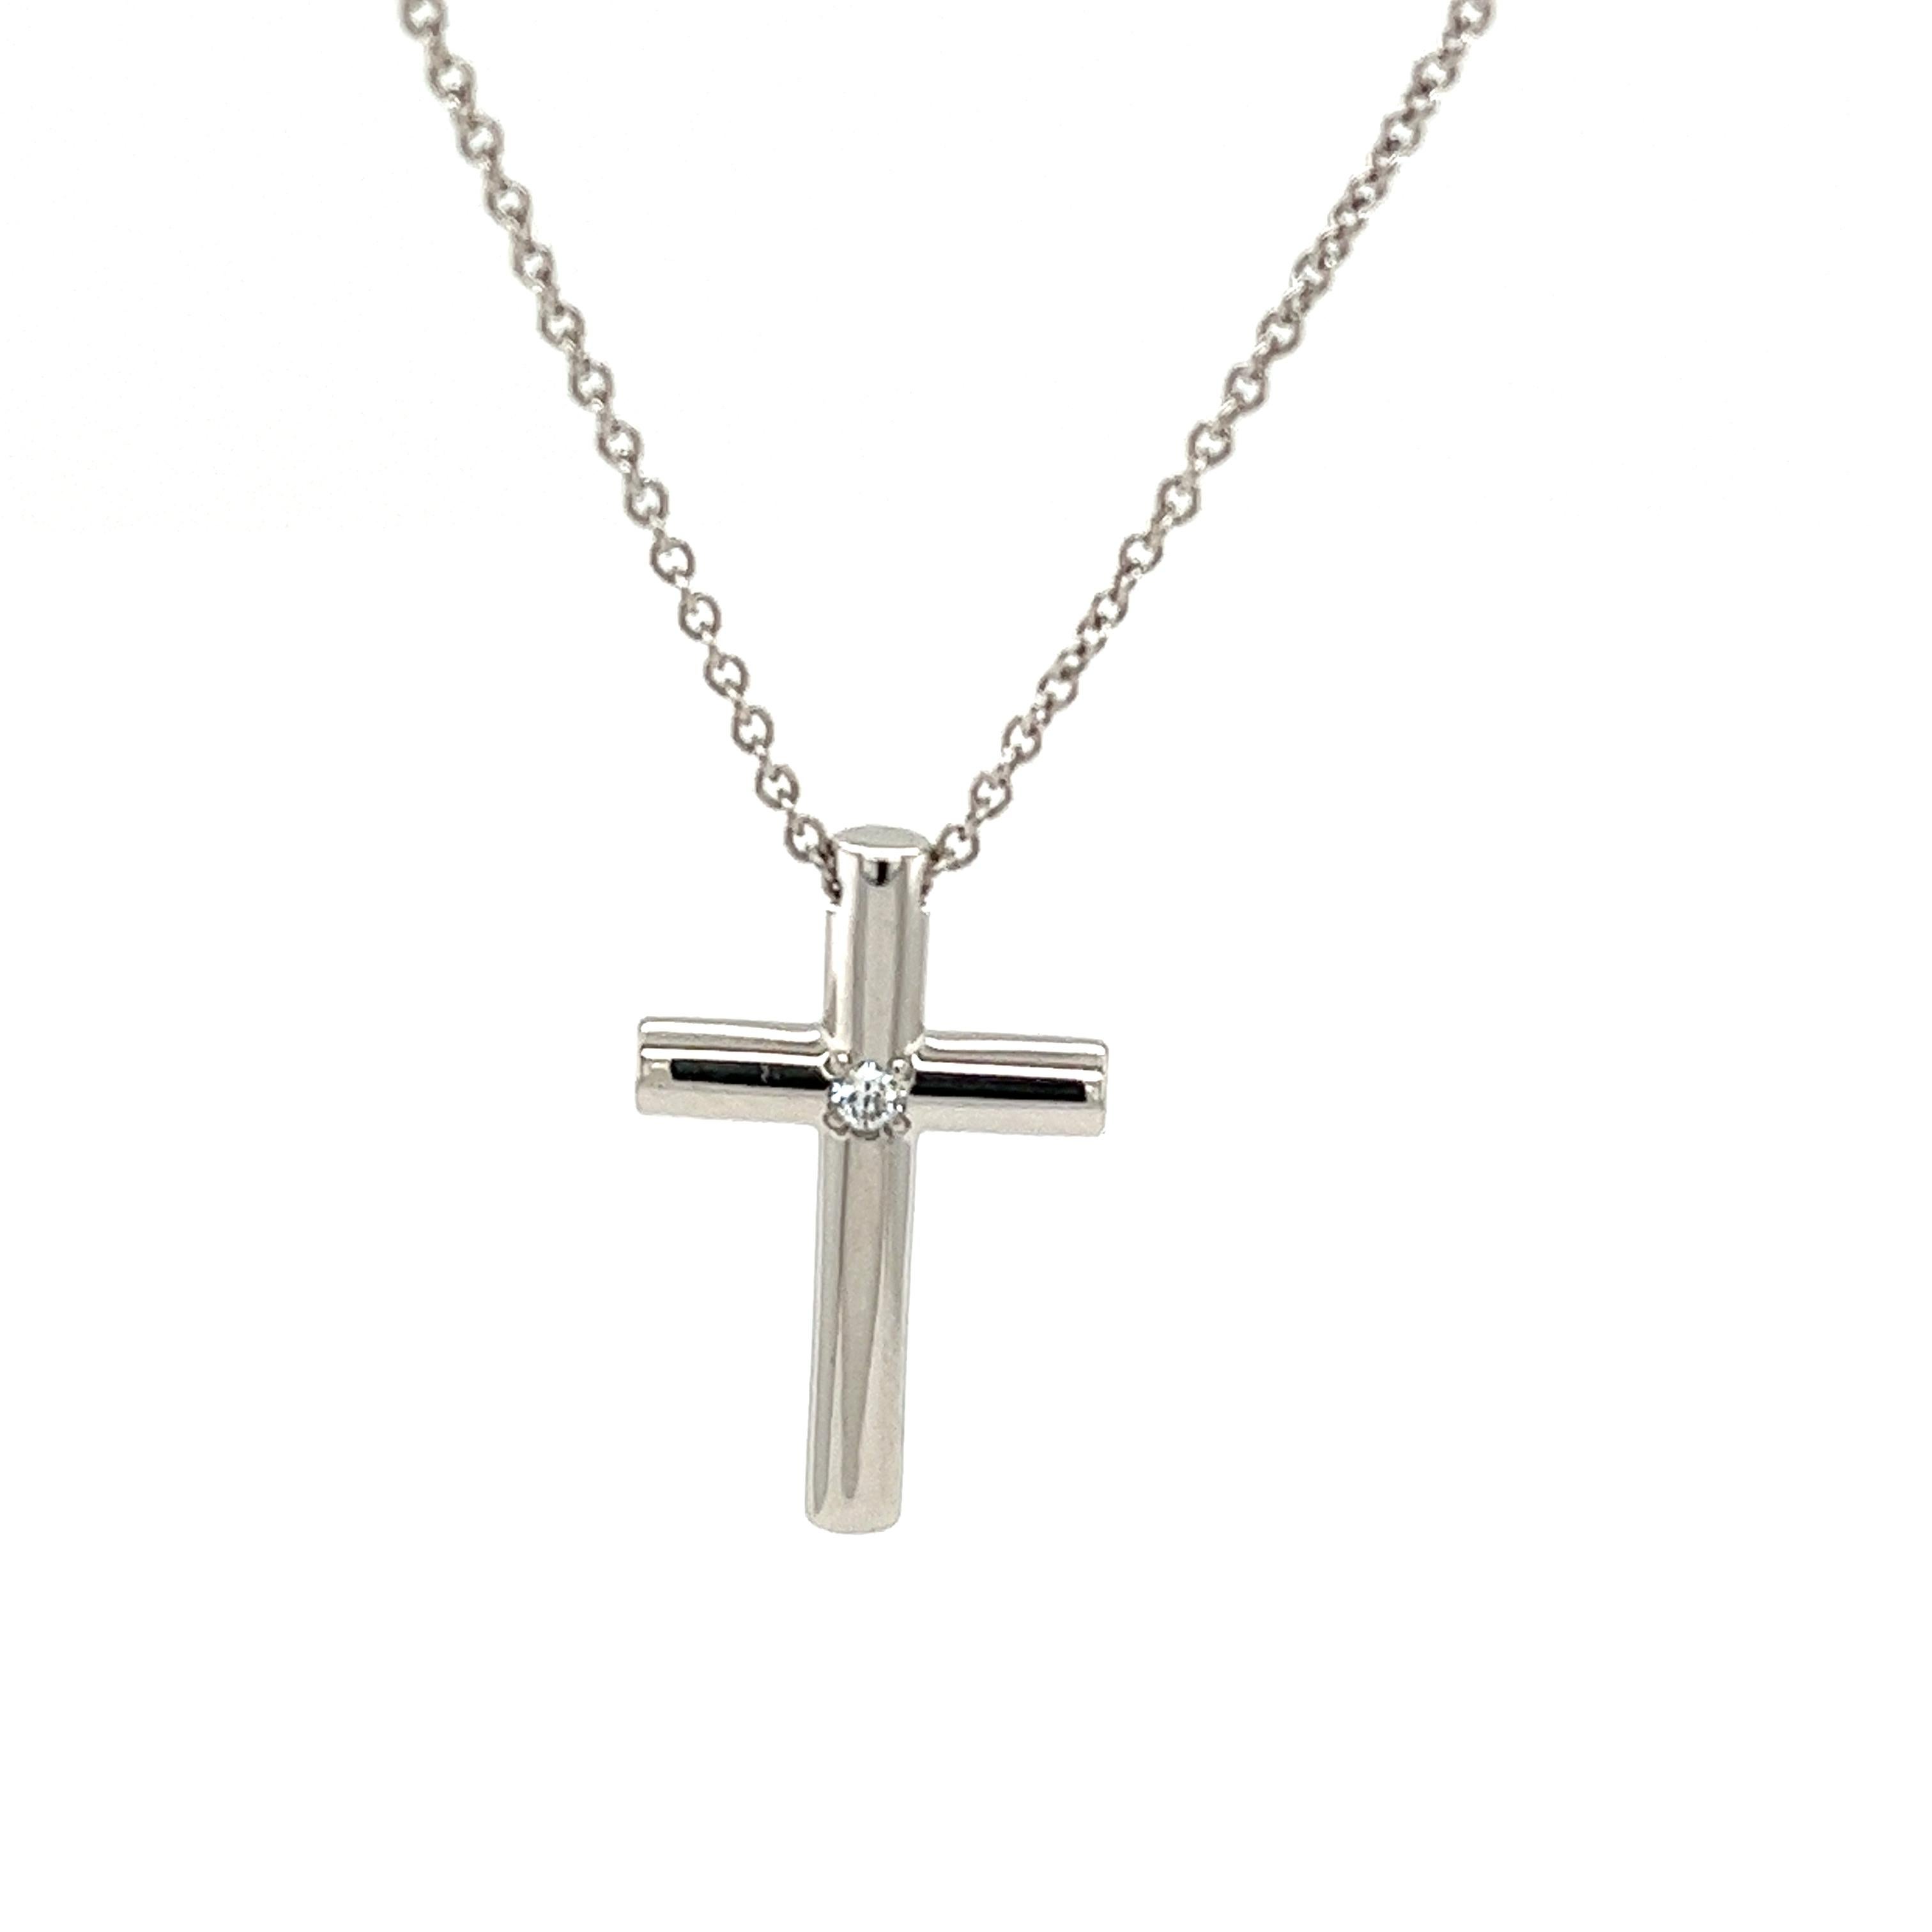 The Tiffany & Co. Single Diamond Cross Pendant on an 18